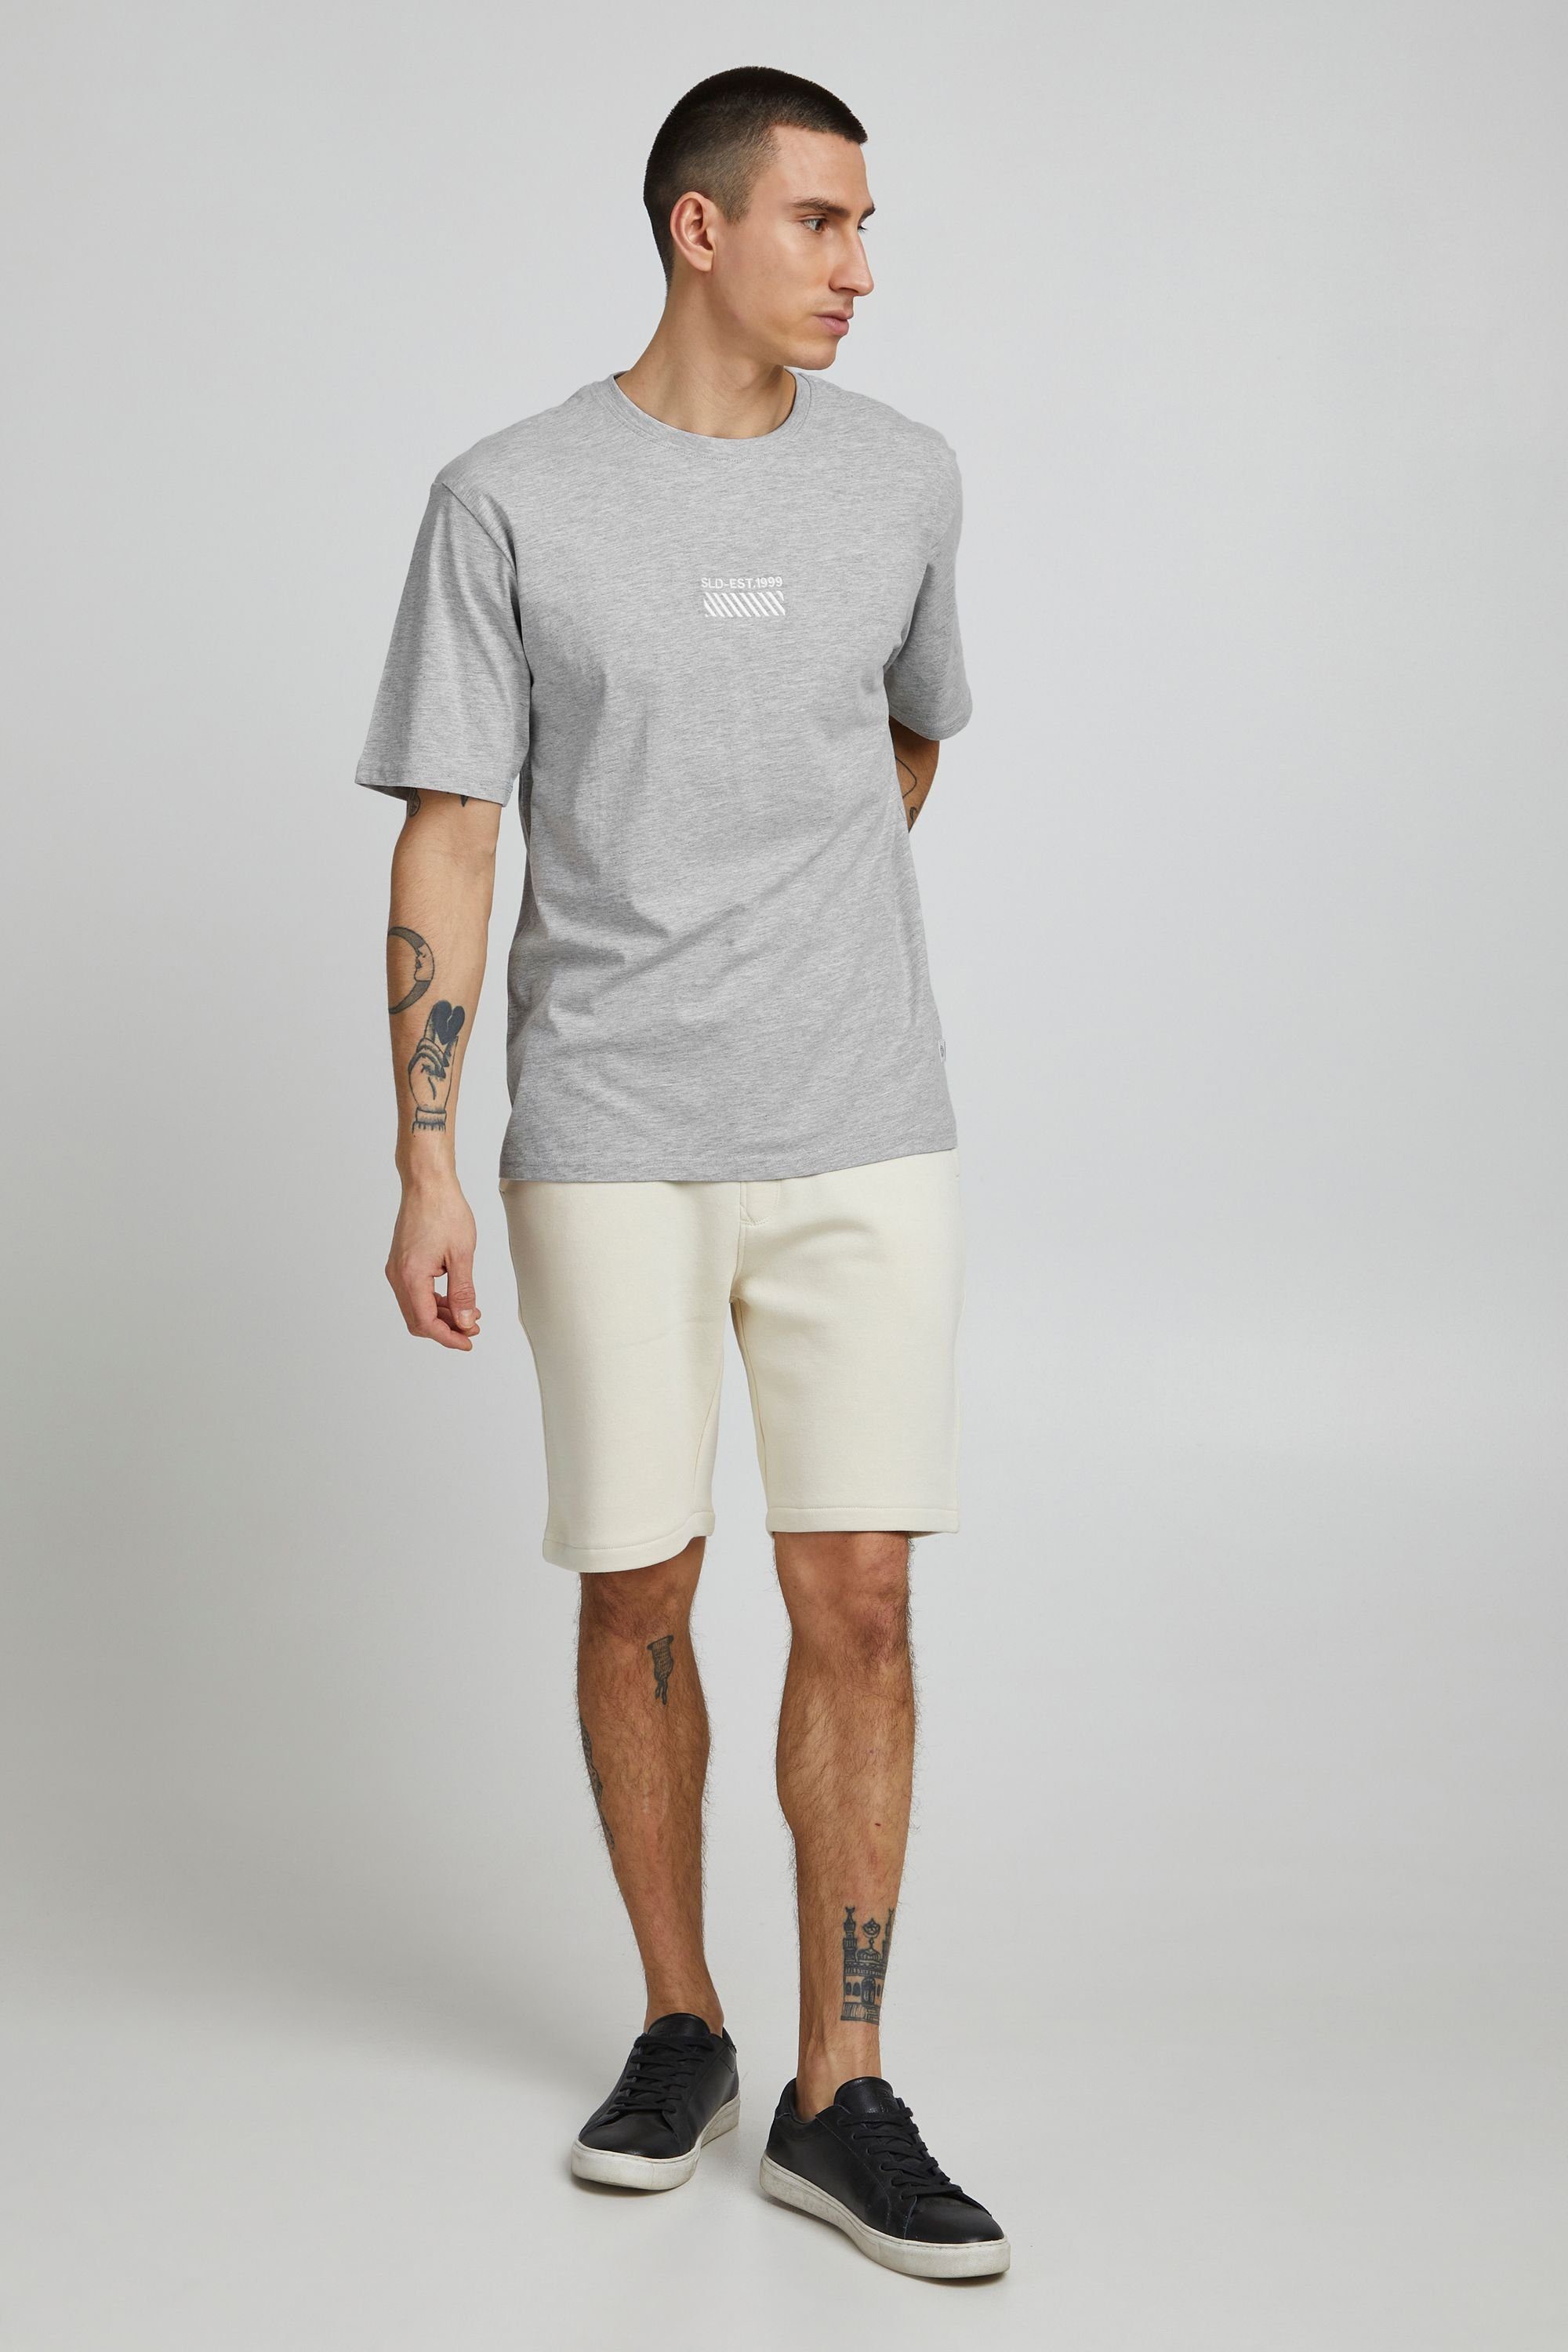 !Solid Light SDRui Grey (1541011) T-Shirt Melange